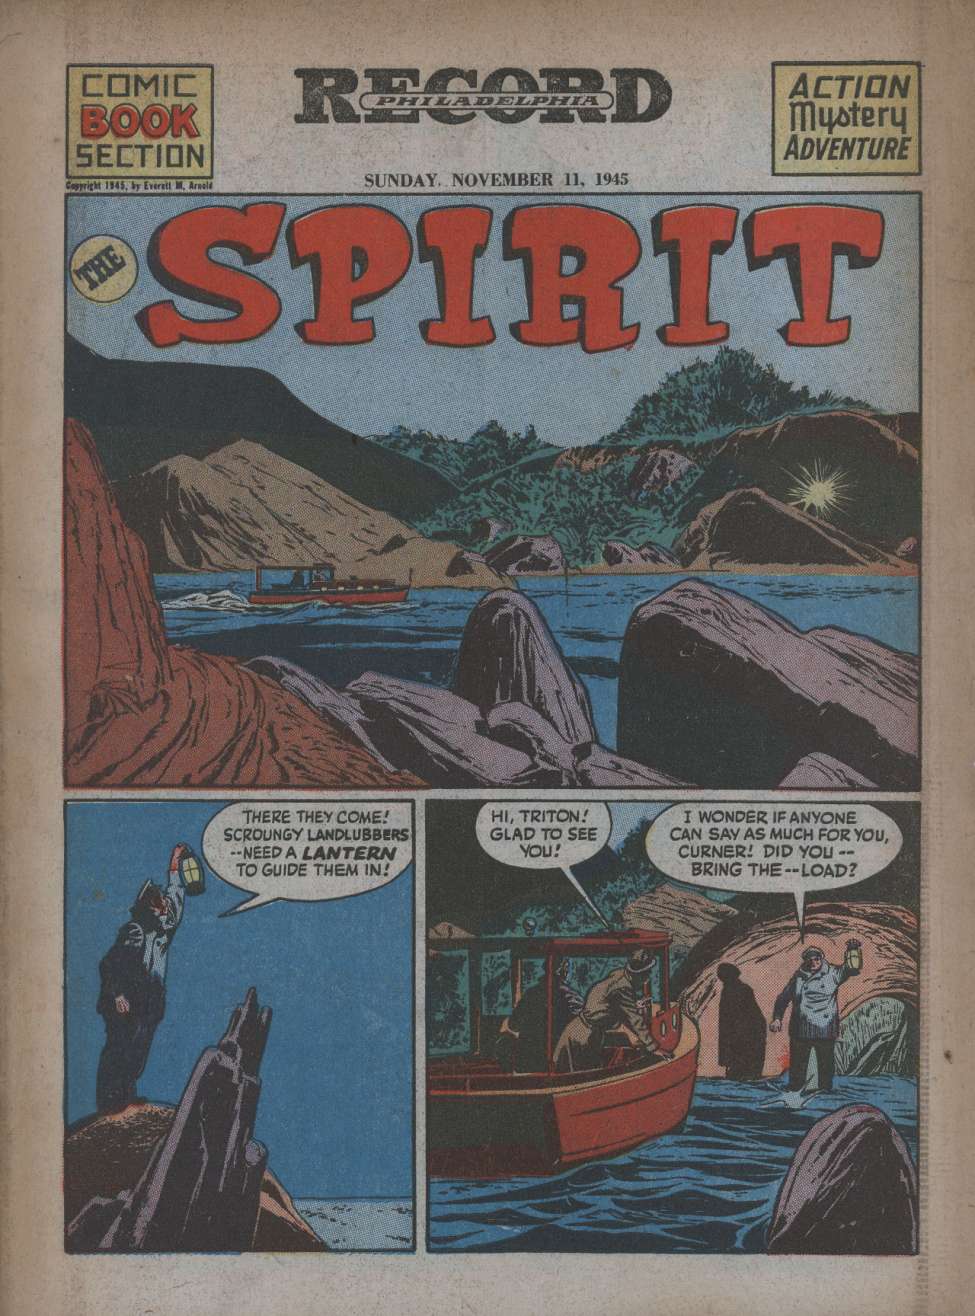 Comic Book Cover For The Spirit (1945-11-11) - Philadelphia Record